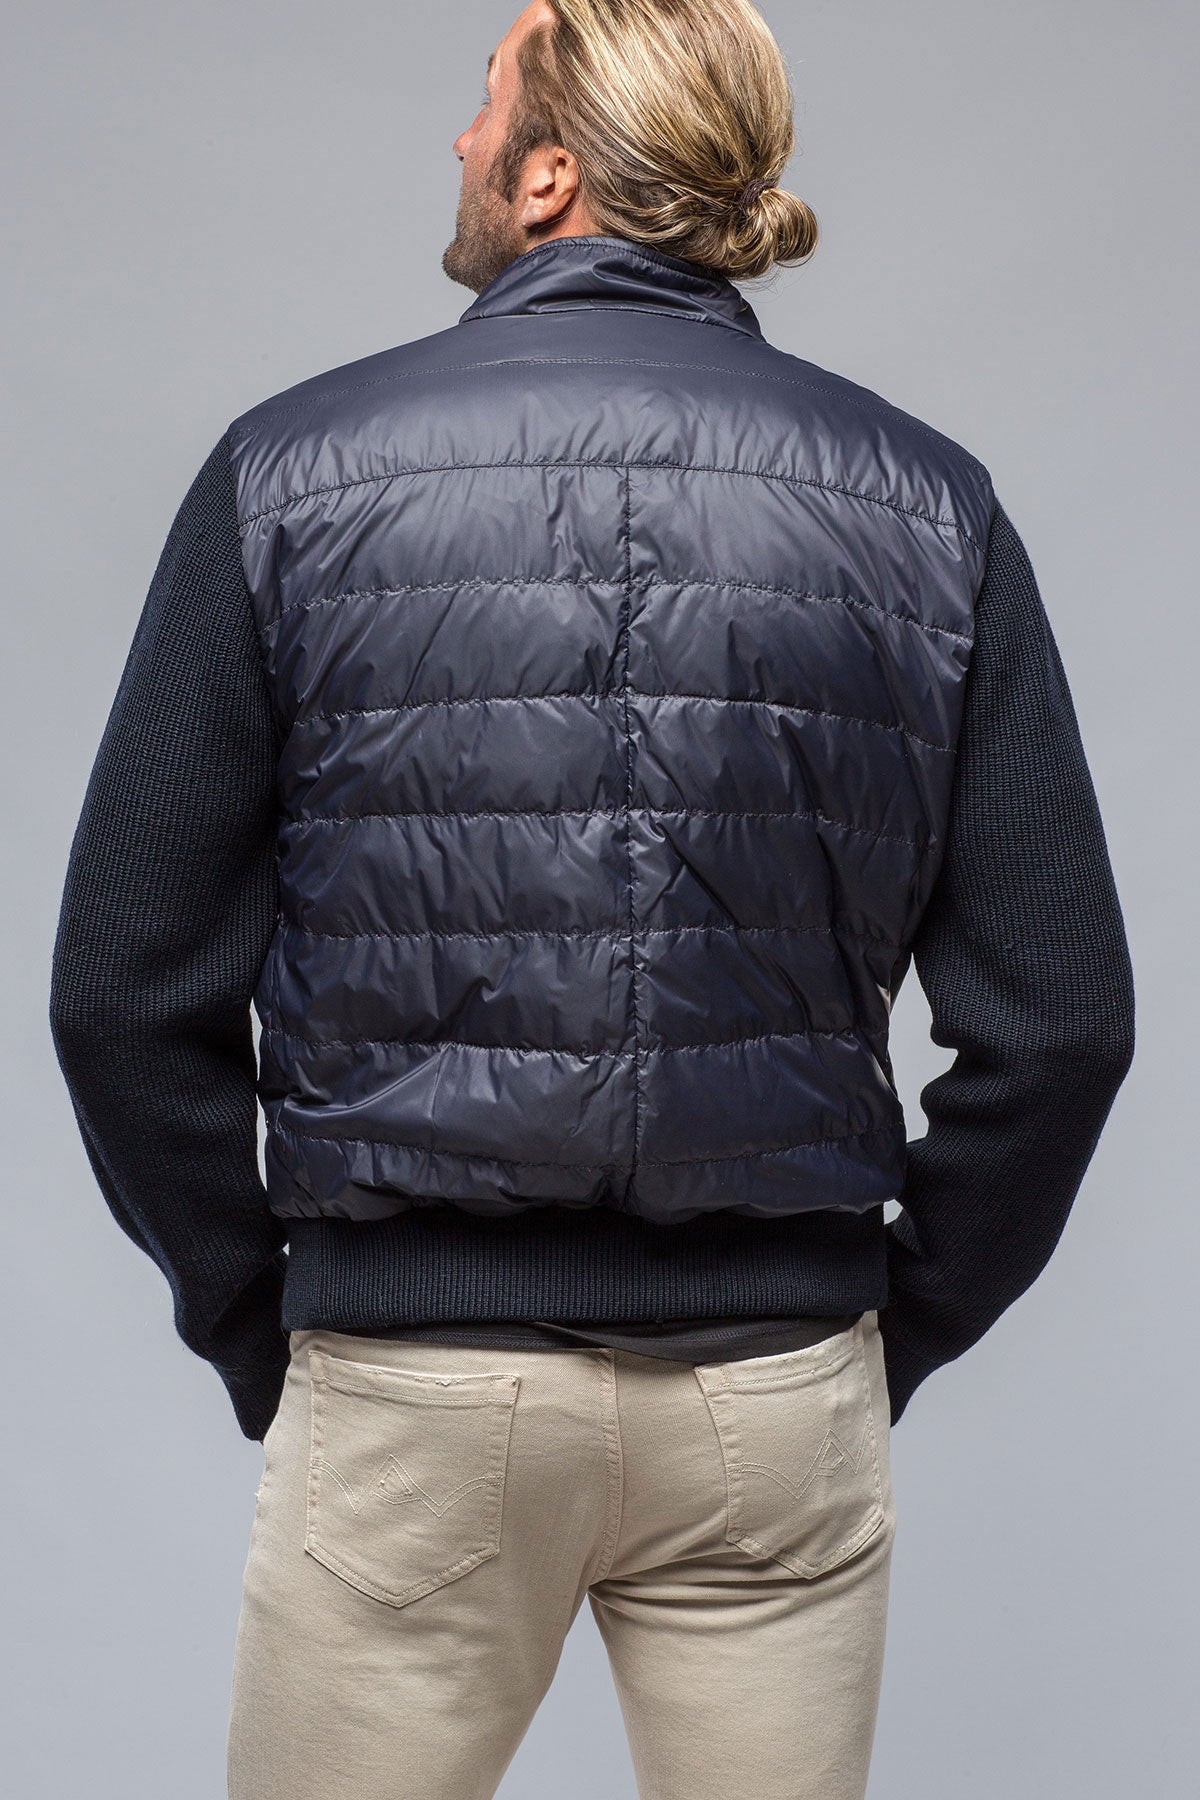 Lindbergh Hybrid Knit Jacket | Samples - Mens - Outerwear | DiBello